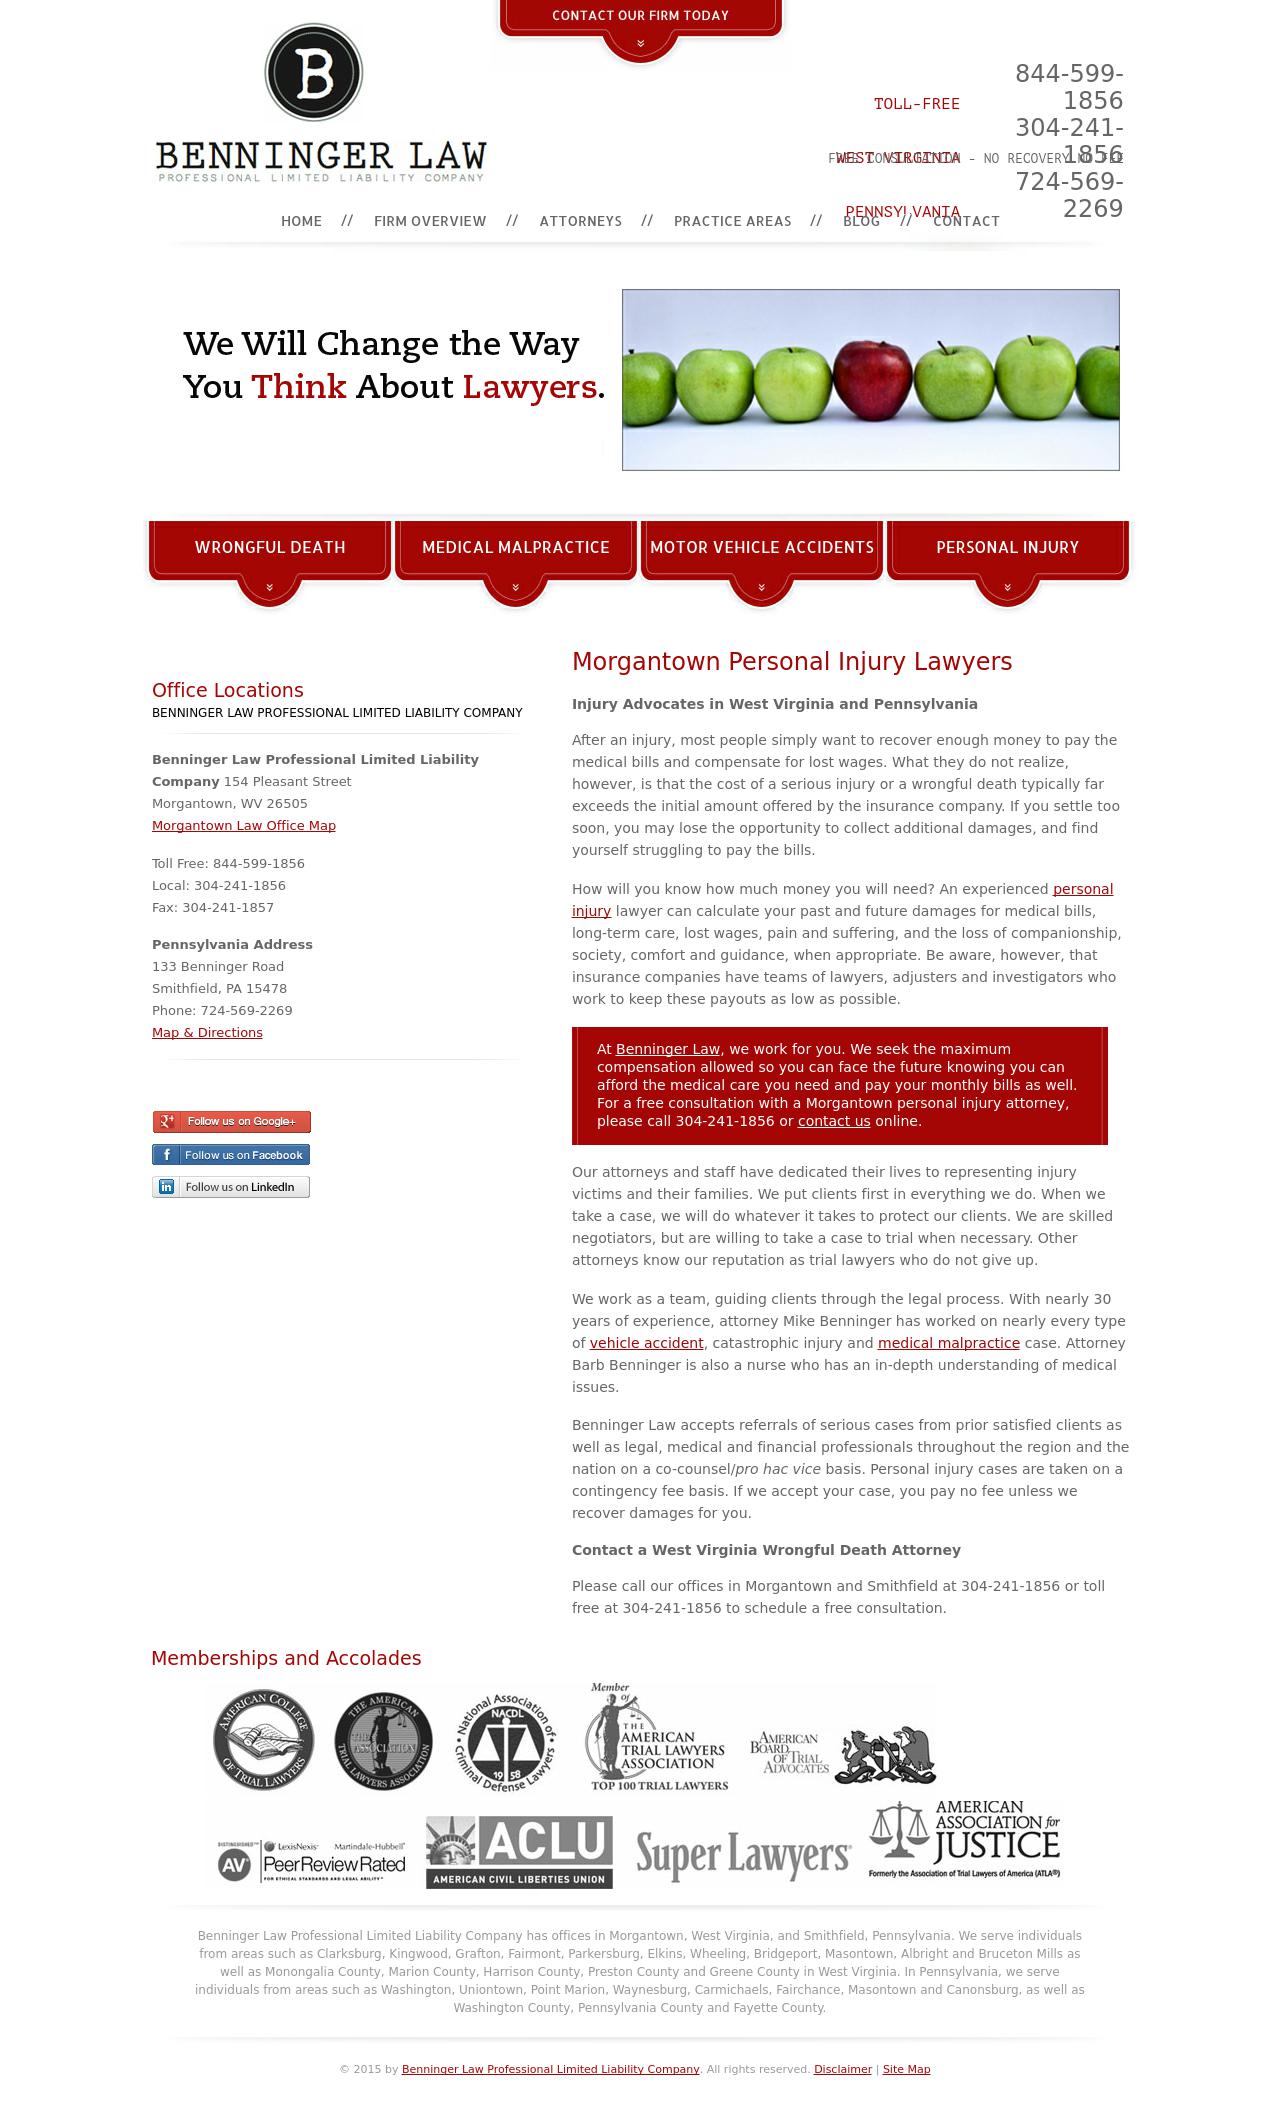 Benninger Law Professional Limited Liability Company - Smithfield PA Lawyers